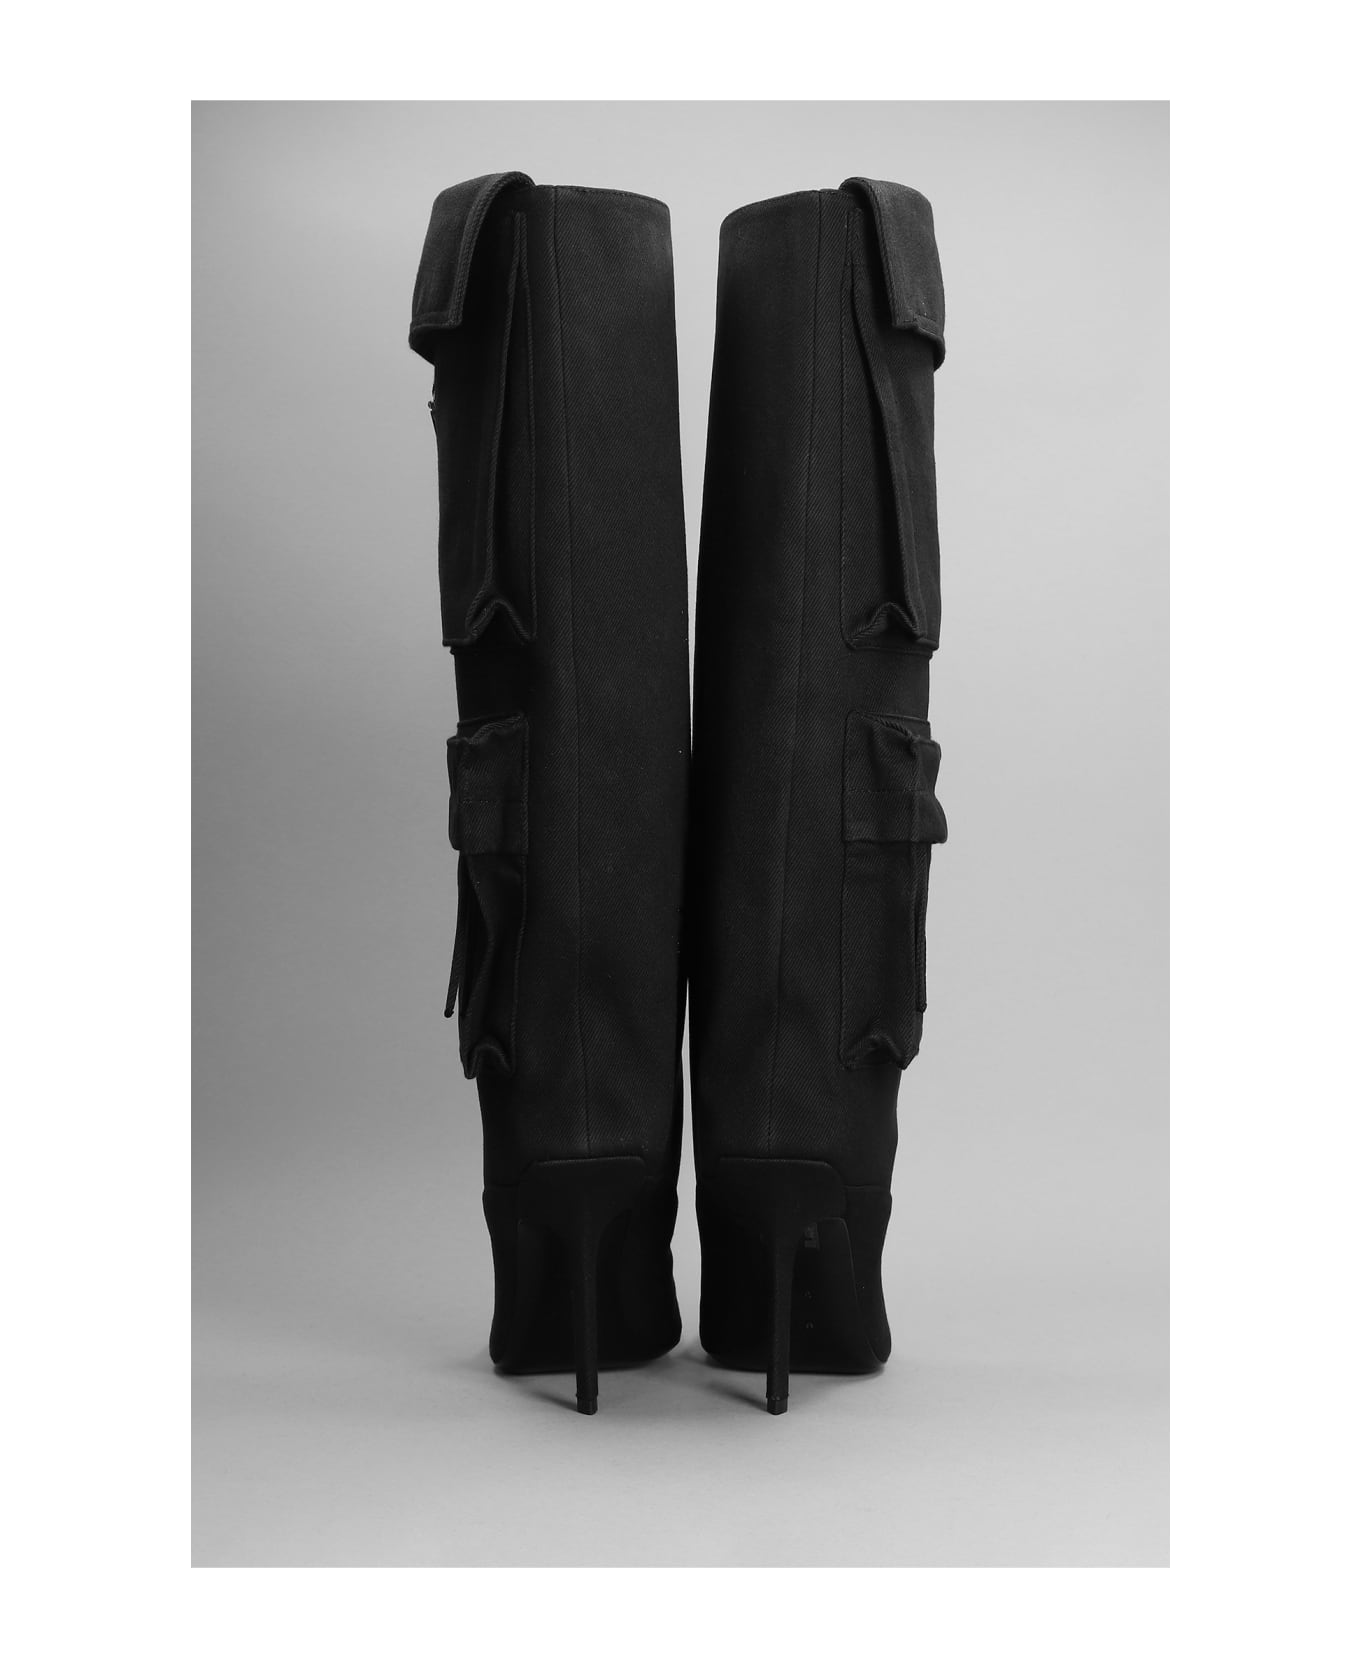 The Attico Sienna Tube High Heels Boots In Black Canvas - black